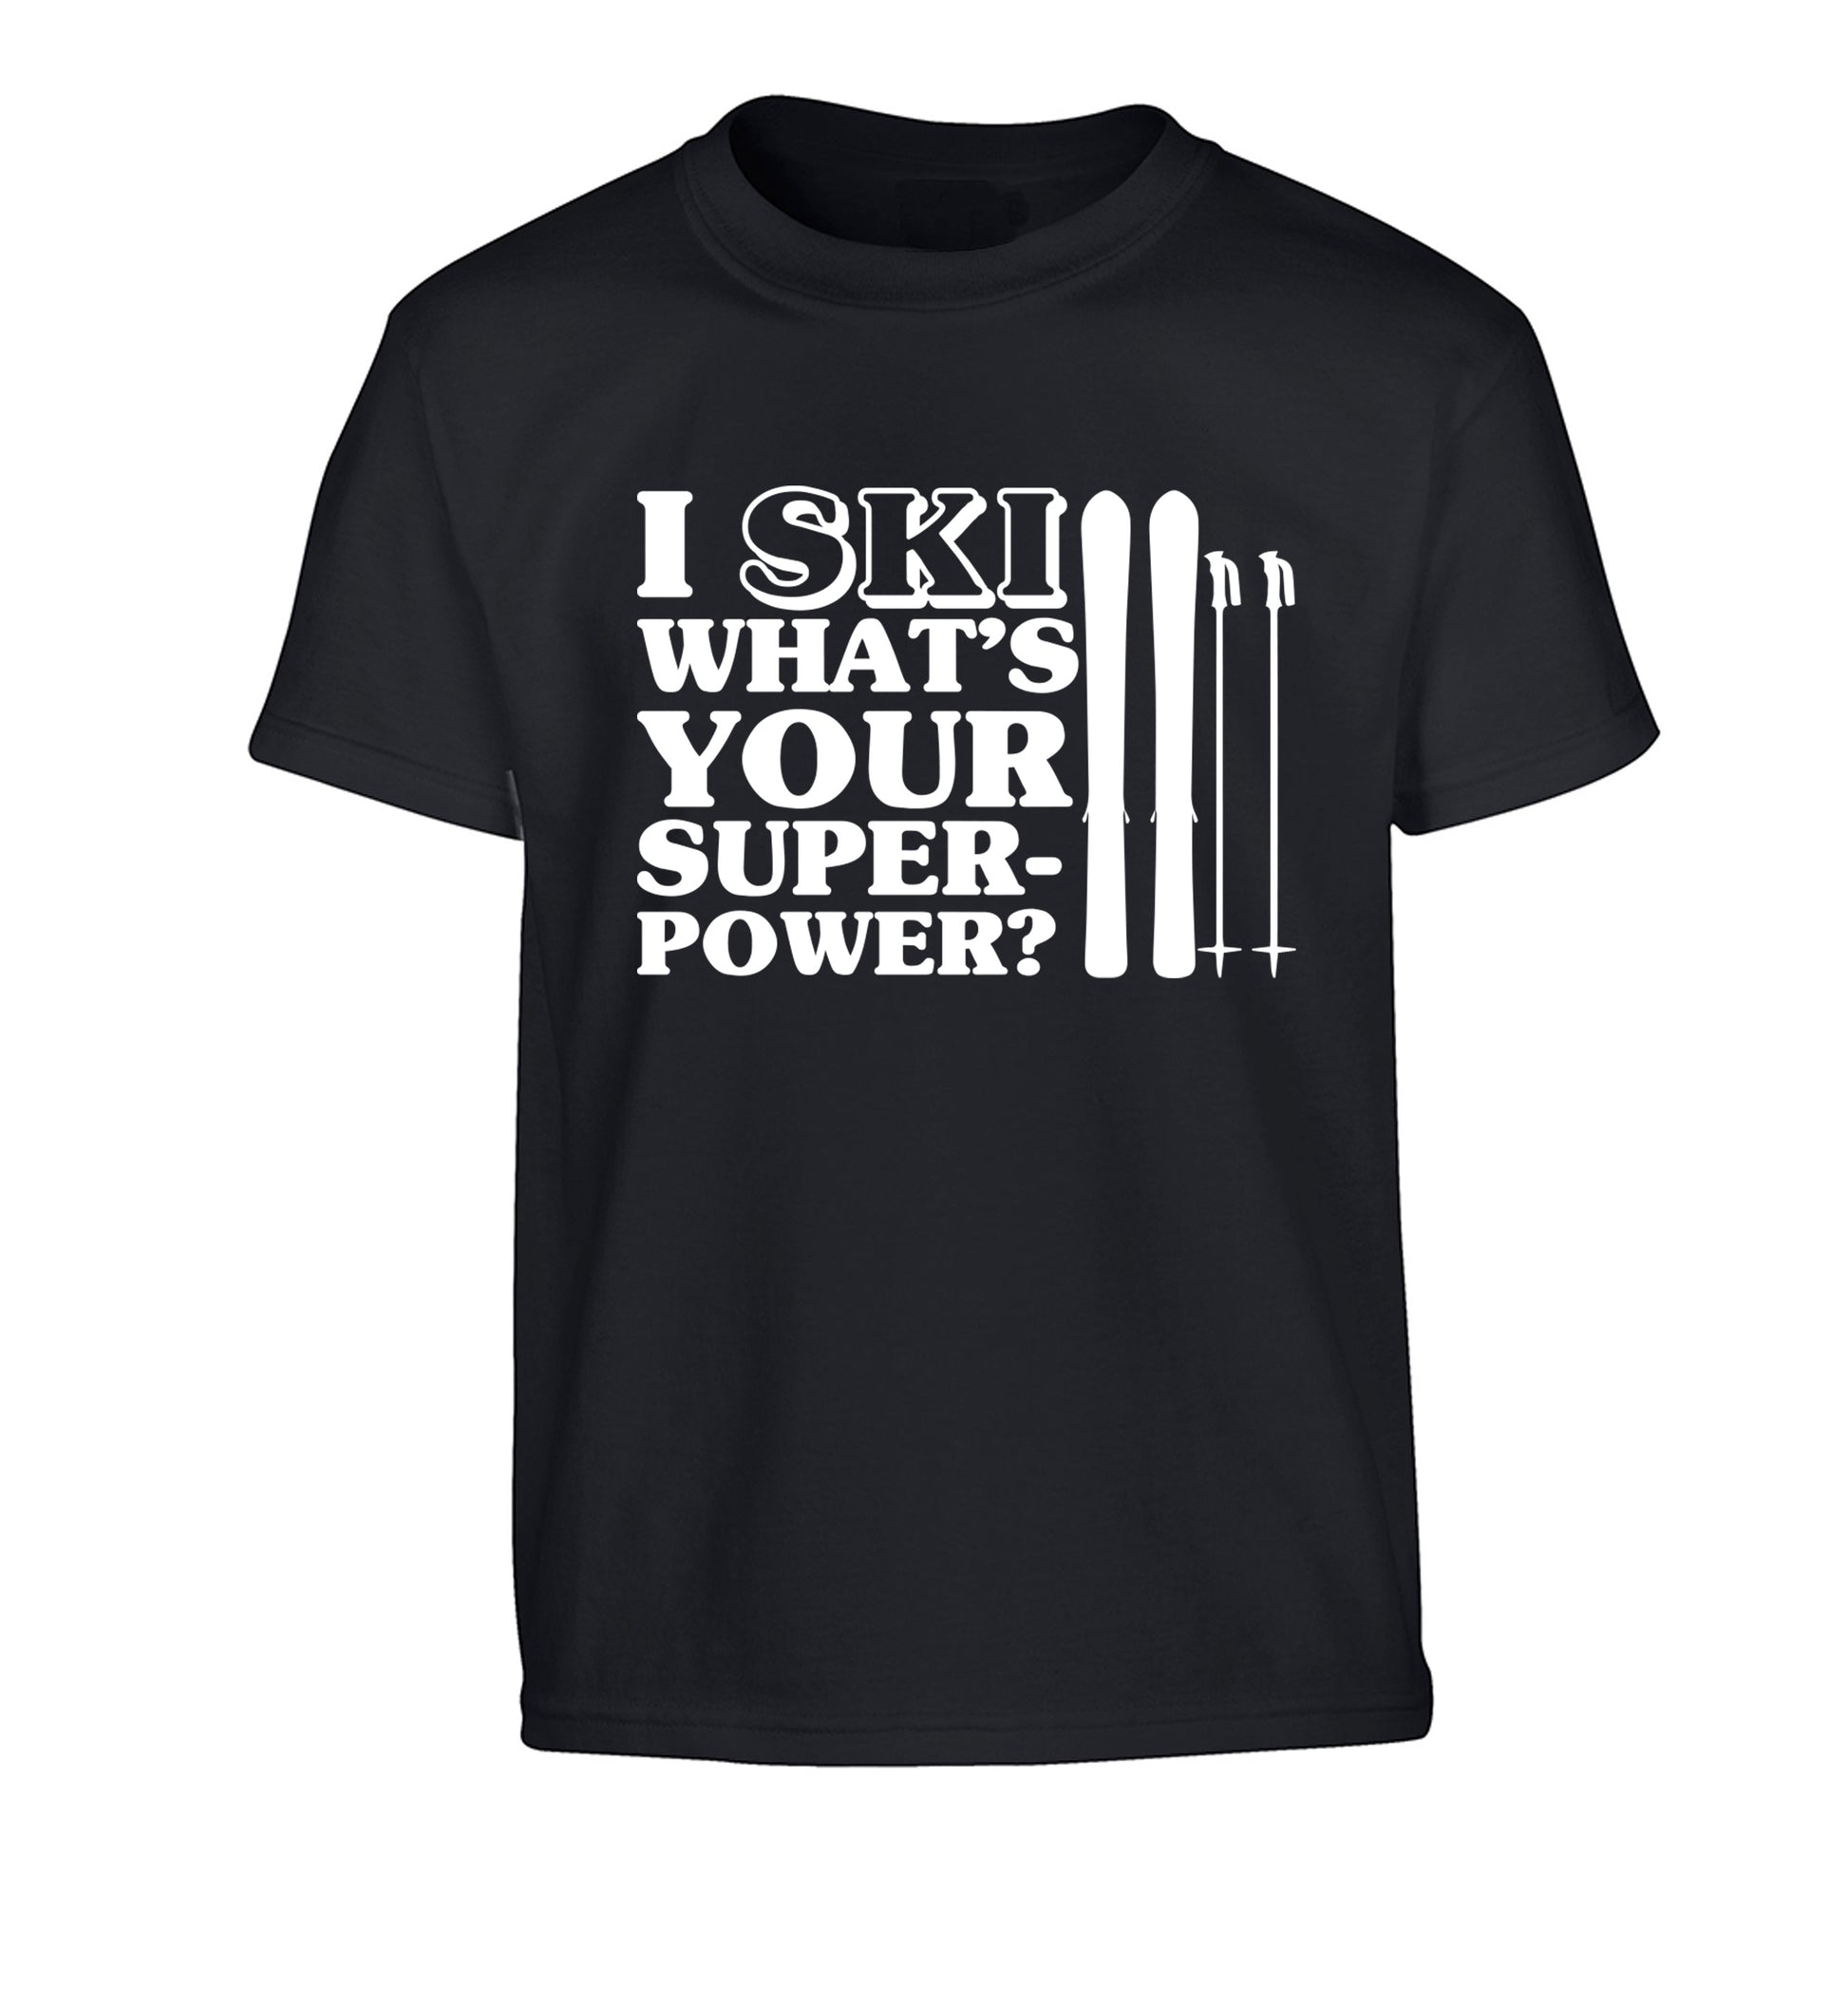 I ski what's your superpower? Children's black Tshirt 12-14 Years